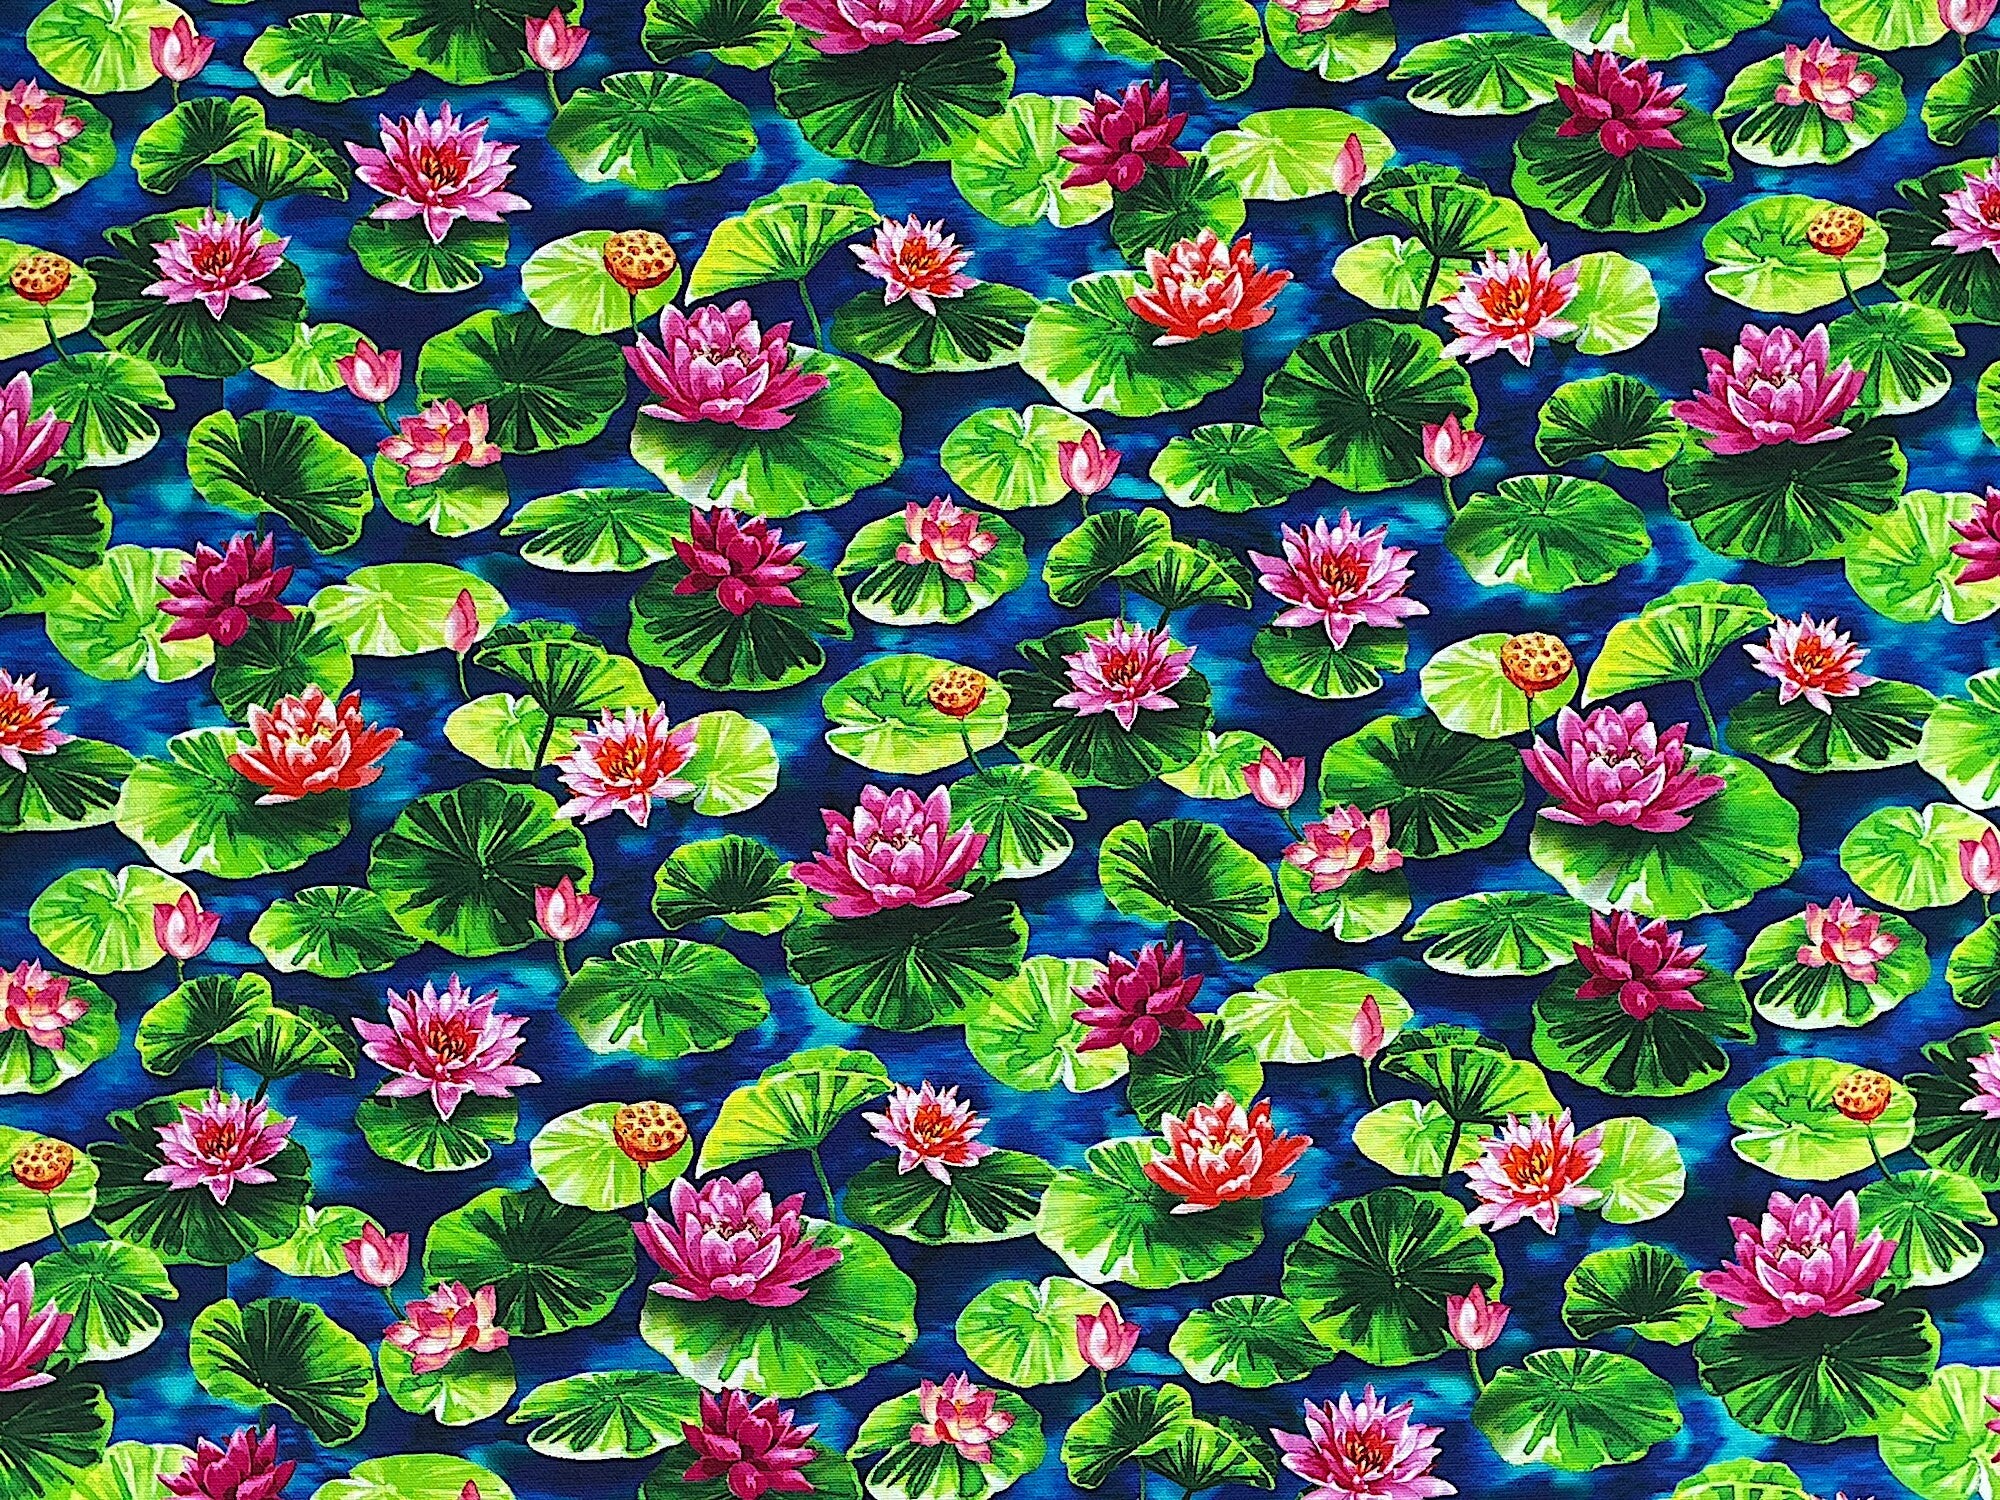 Koi Pond - Blue Water Lotus - Fish Fabric - Cotton Fabric - Quilting Fabric - Michael Miller - FISH-41